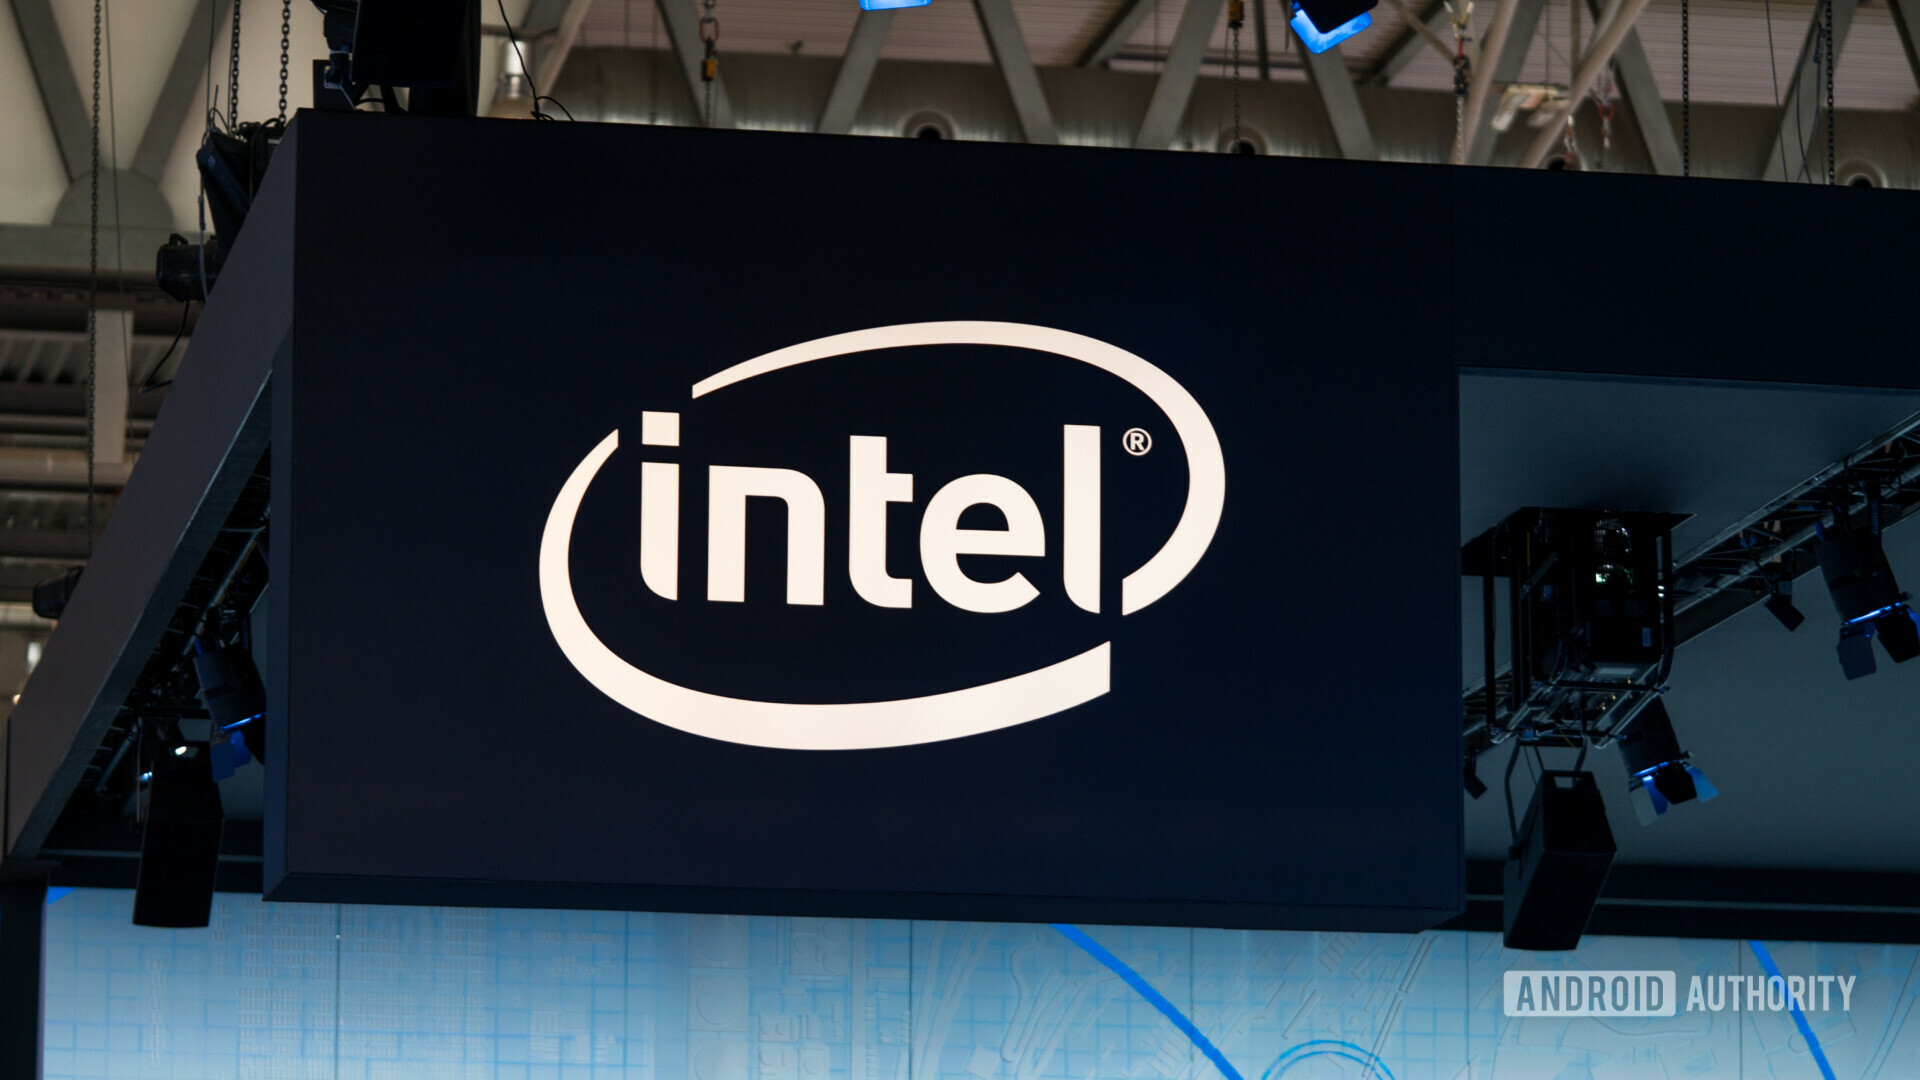 The Intel logo.